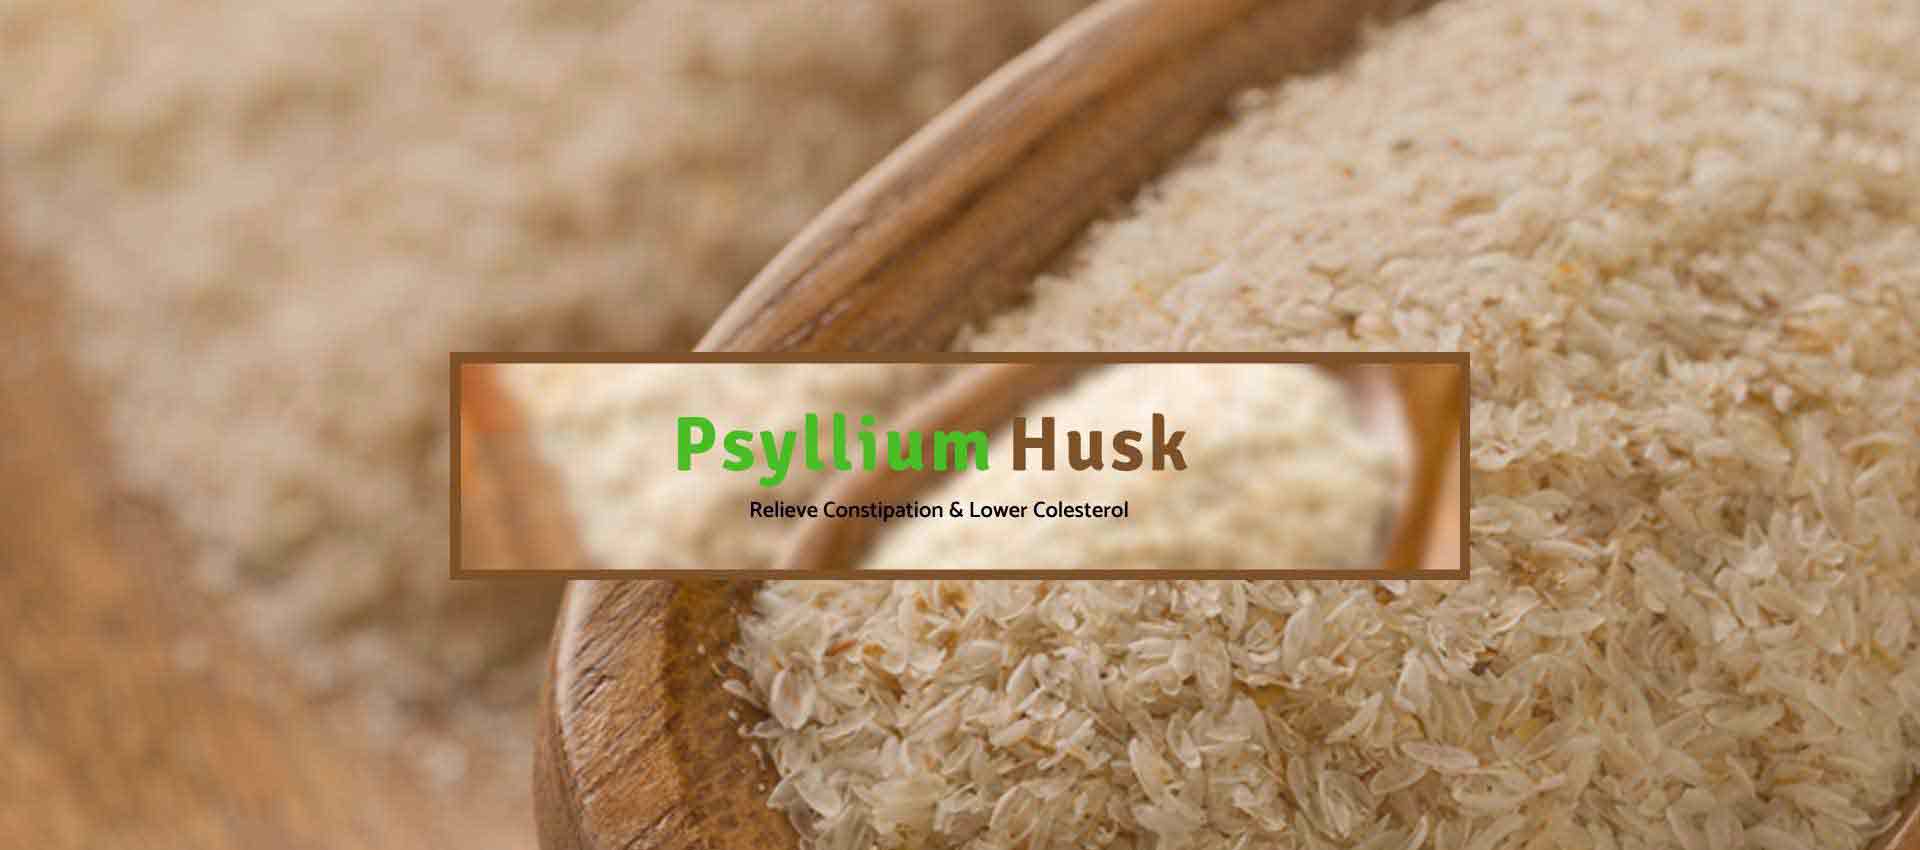 Psyllium Husk Manufacturers in Brazil